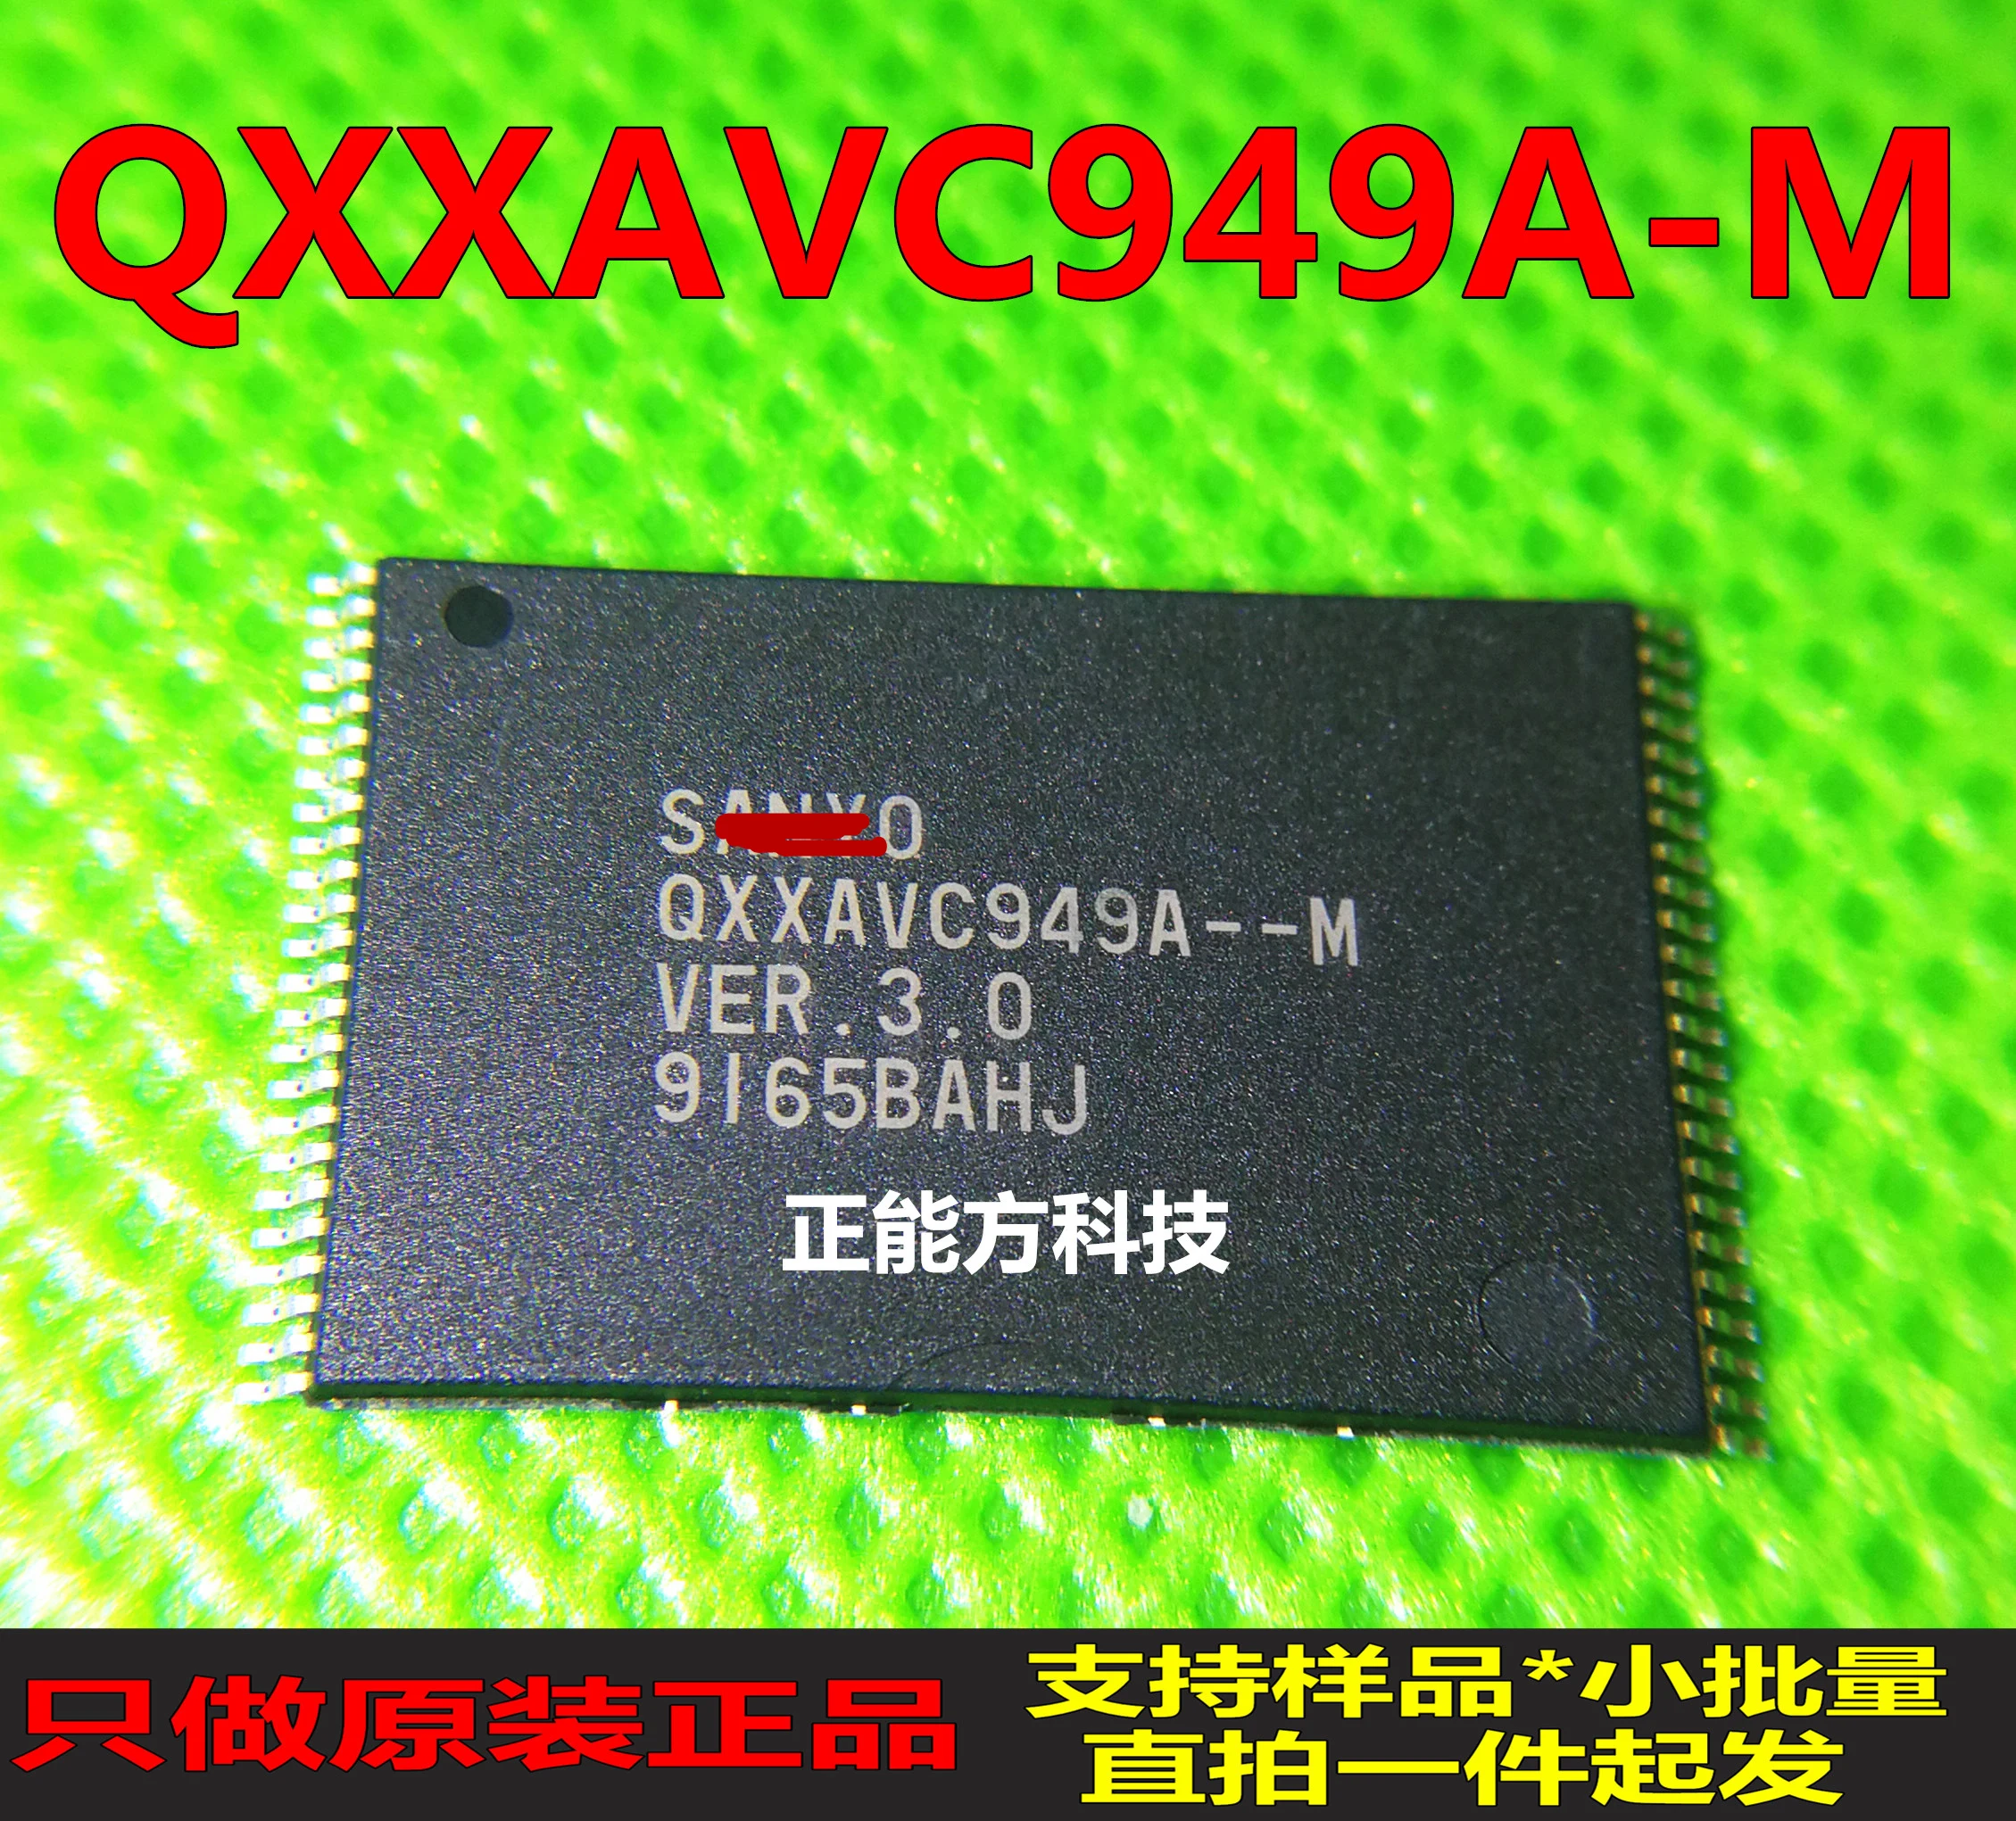 QXXAVC949A-M новый импортный оригинал